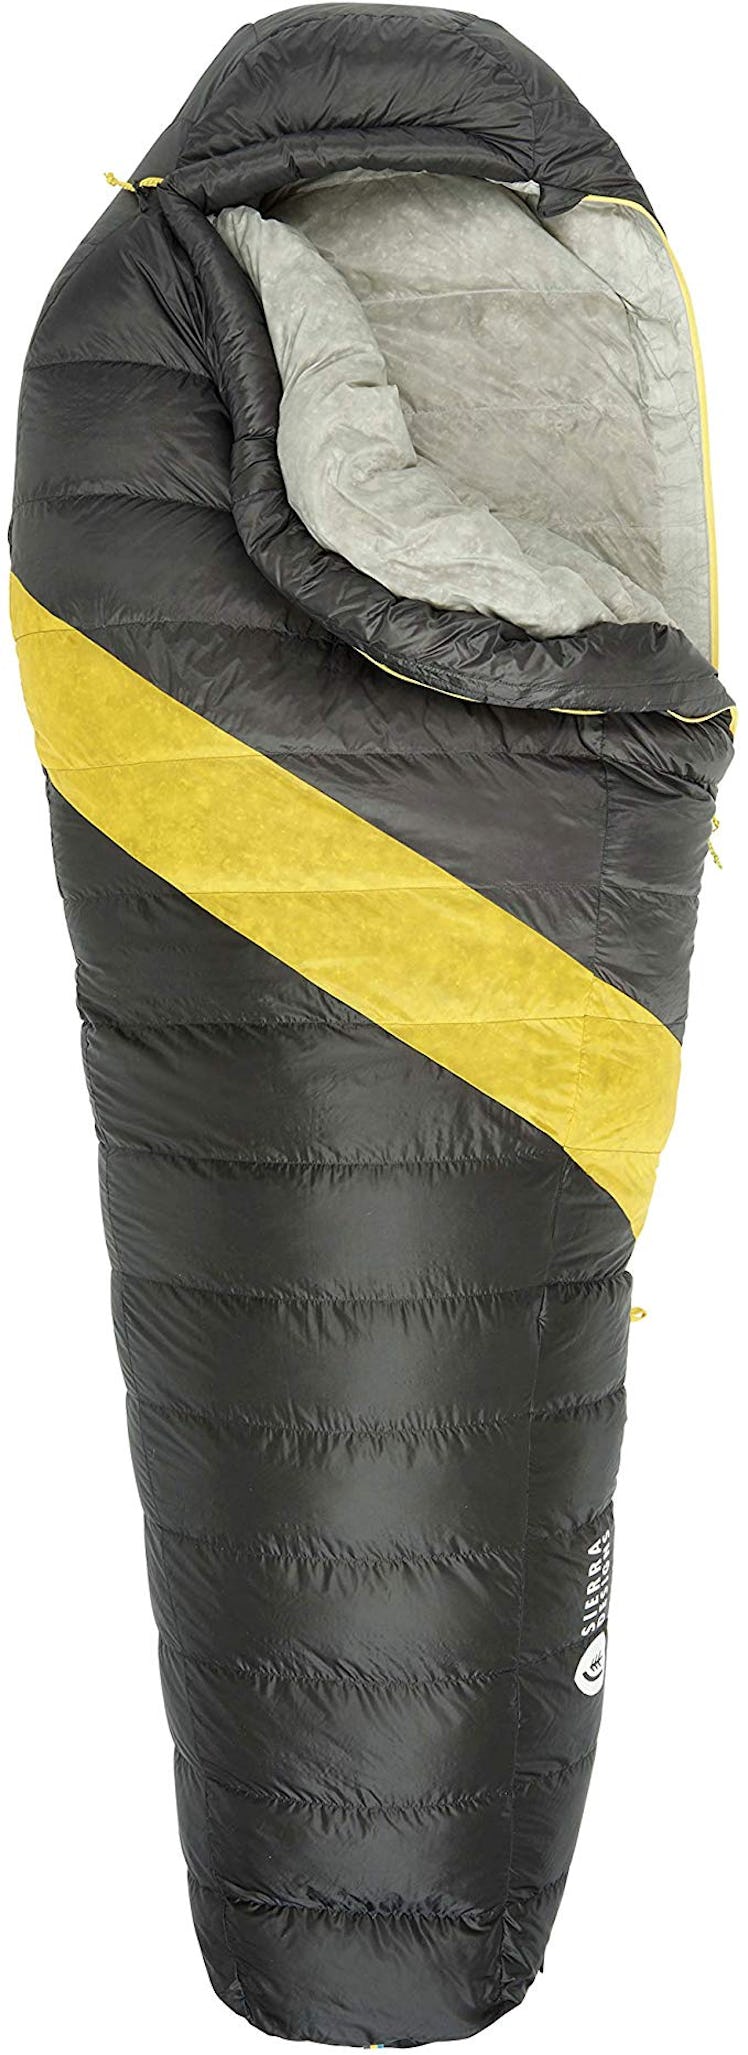 Sierra Designs Nitro 0 Degree DriDown Sleeping Bag 